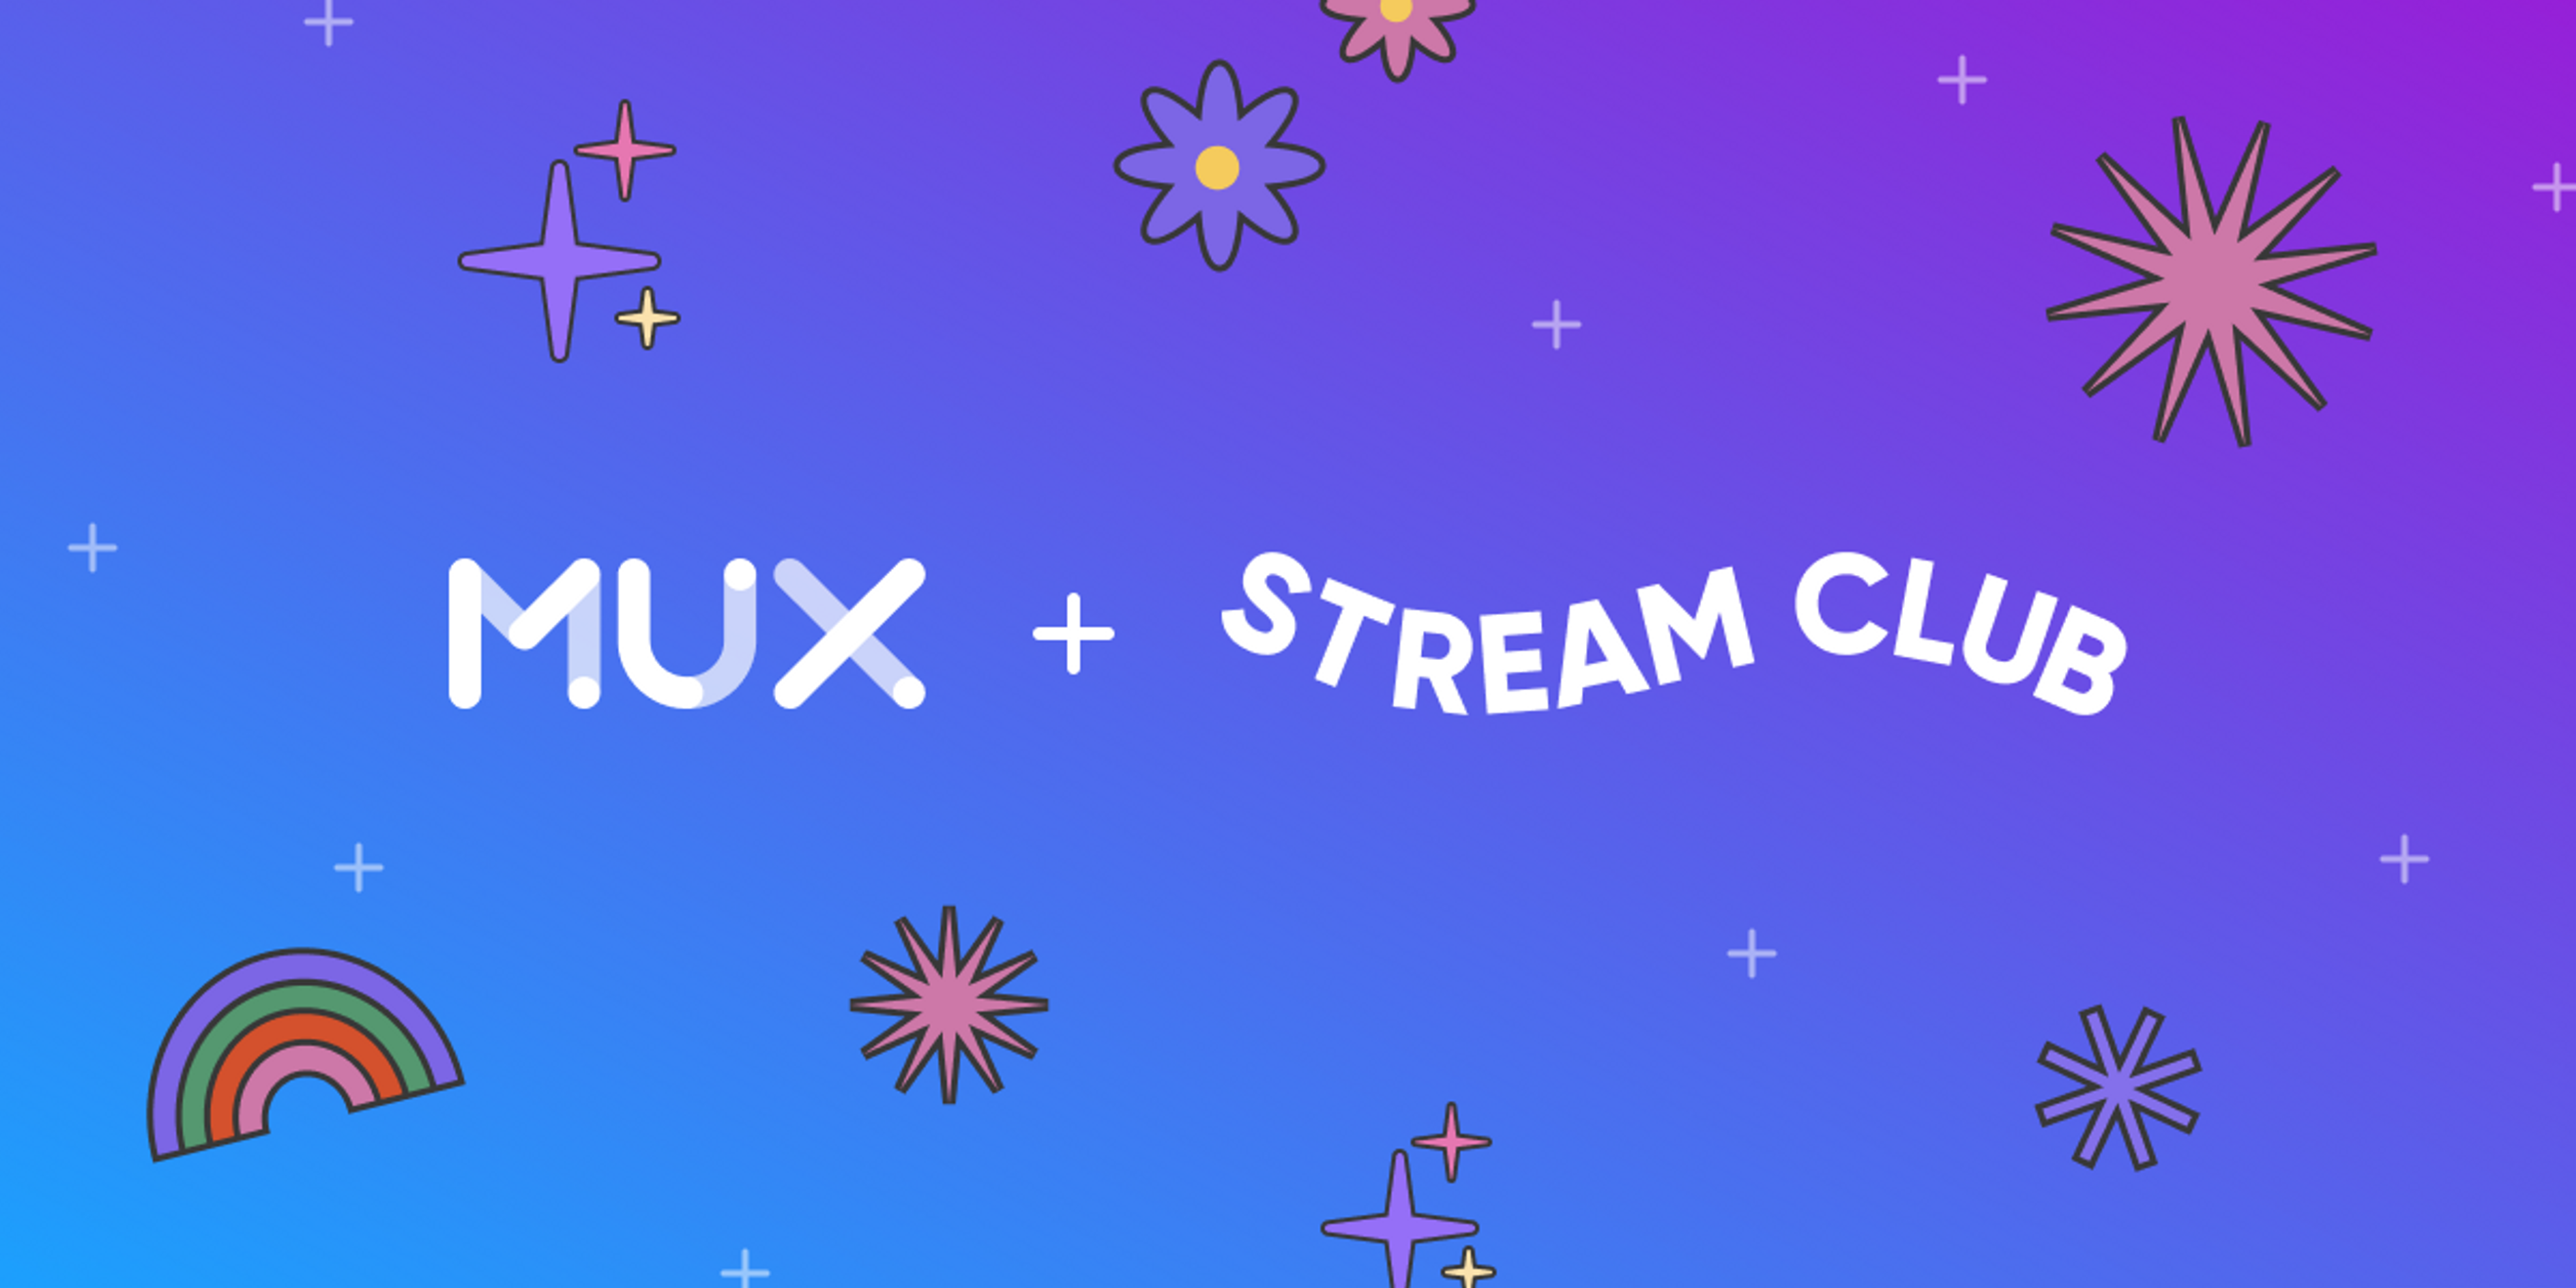 Mux + Stream Club